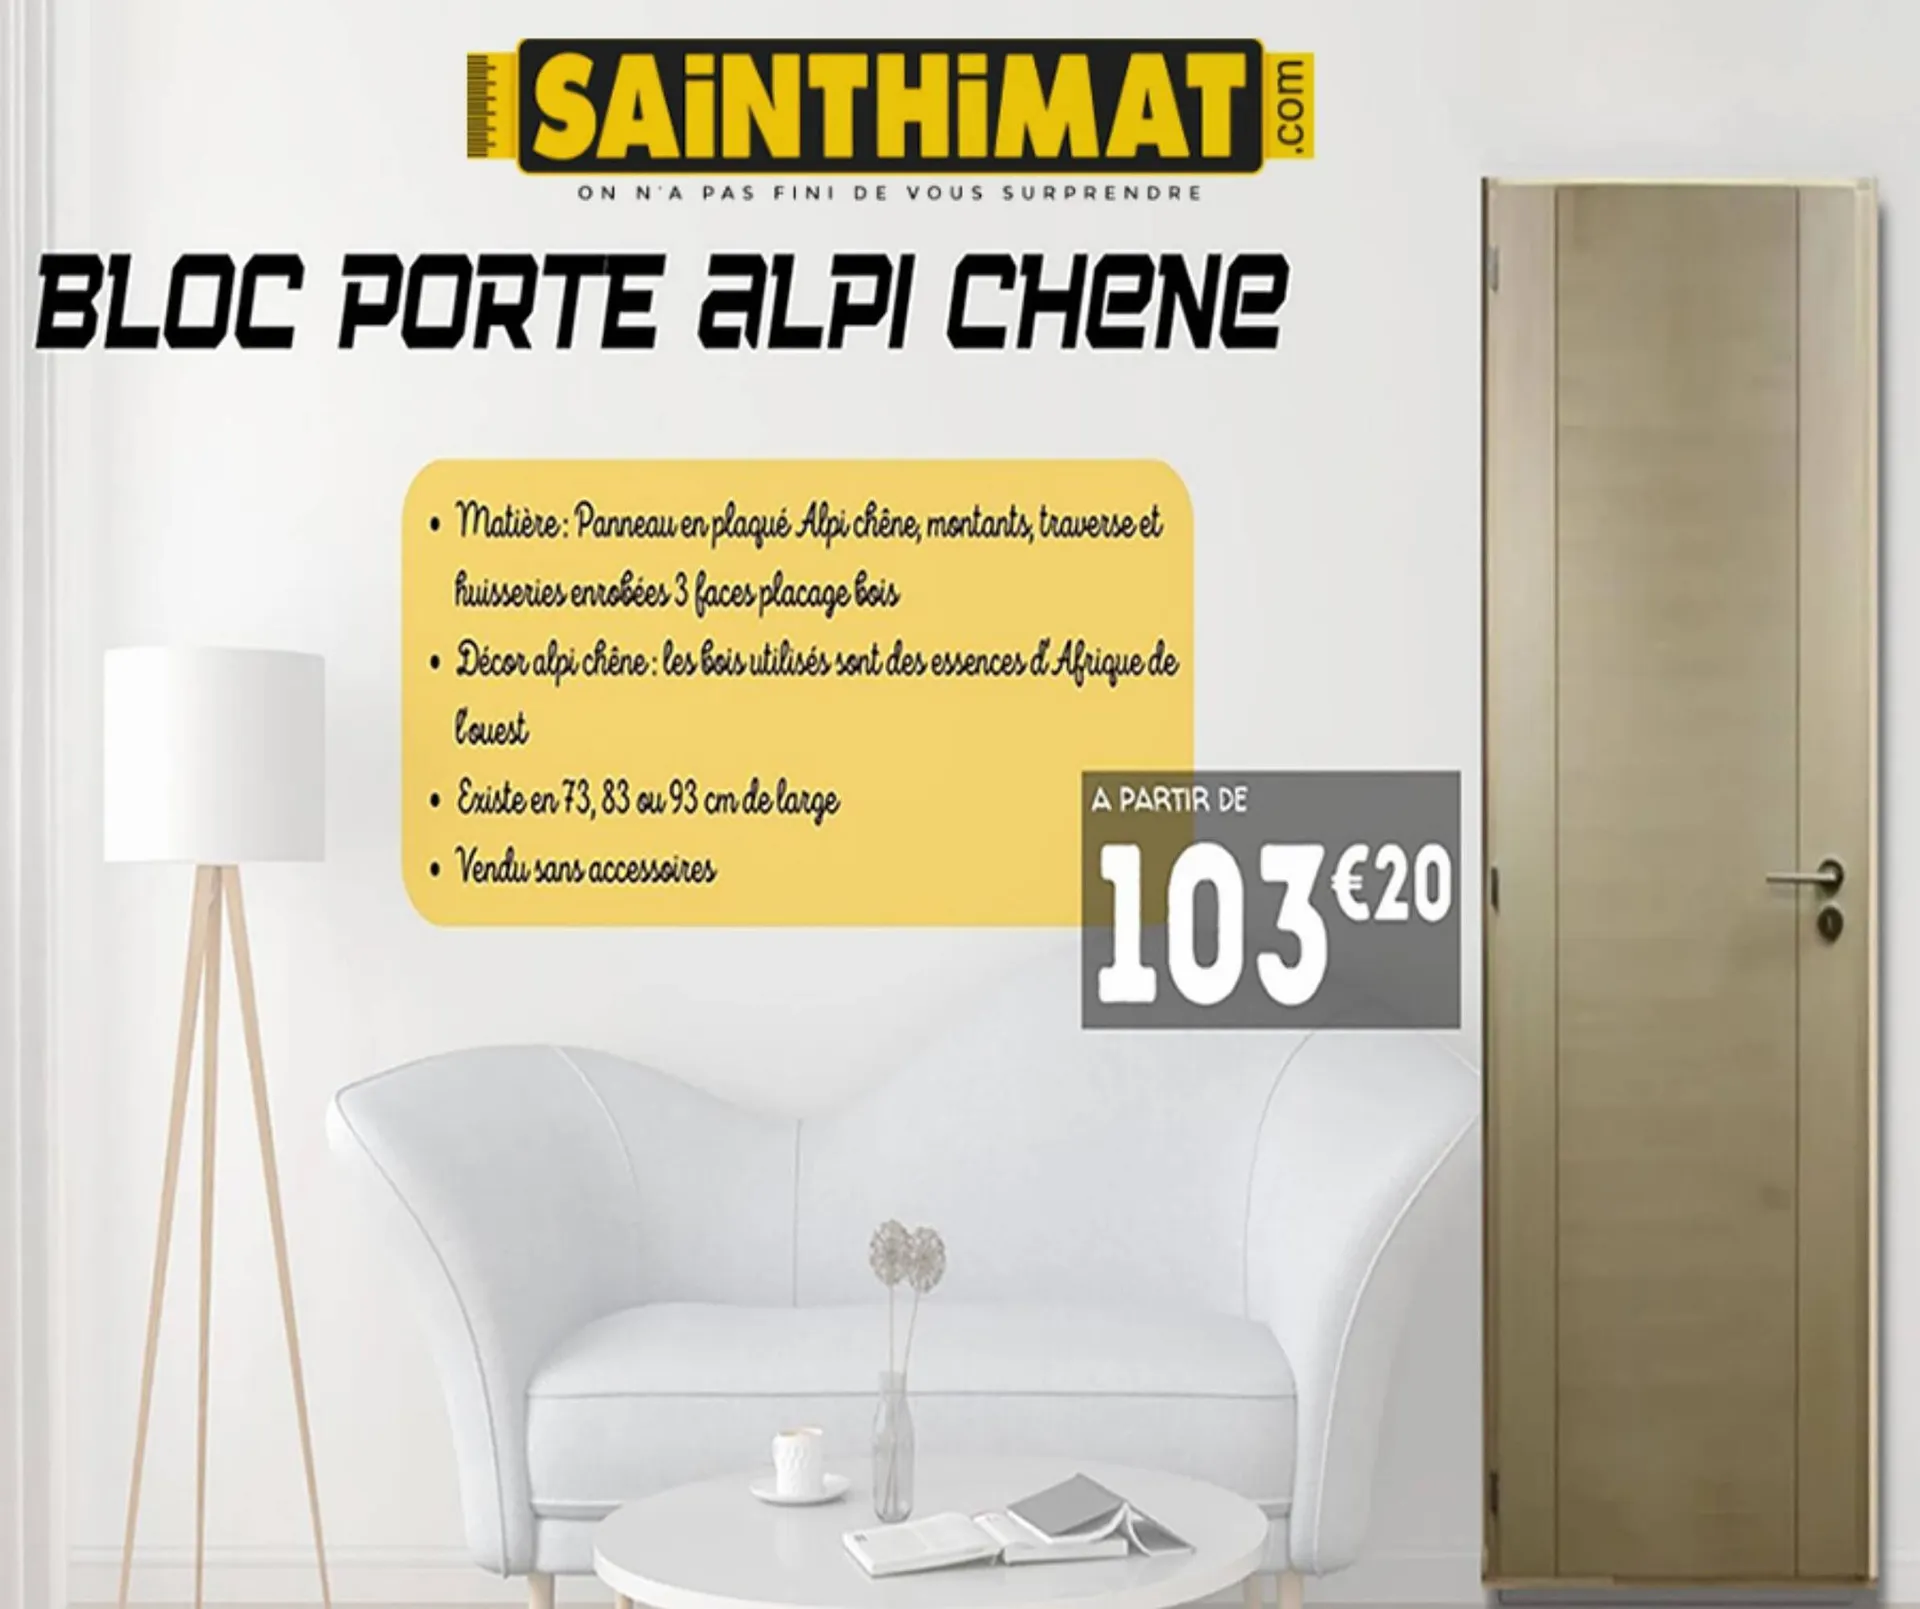 Catalogue Sainthimat - 1